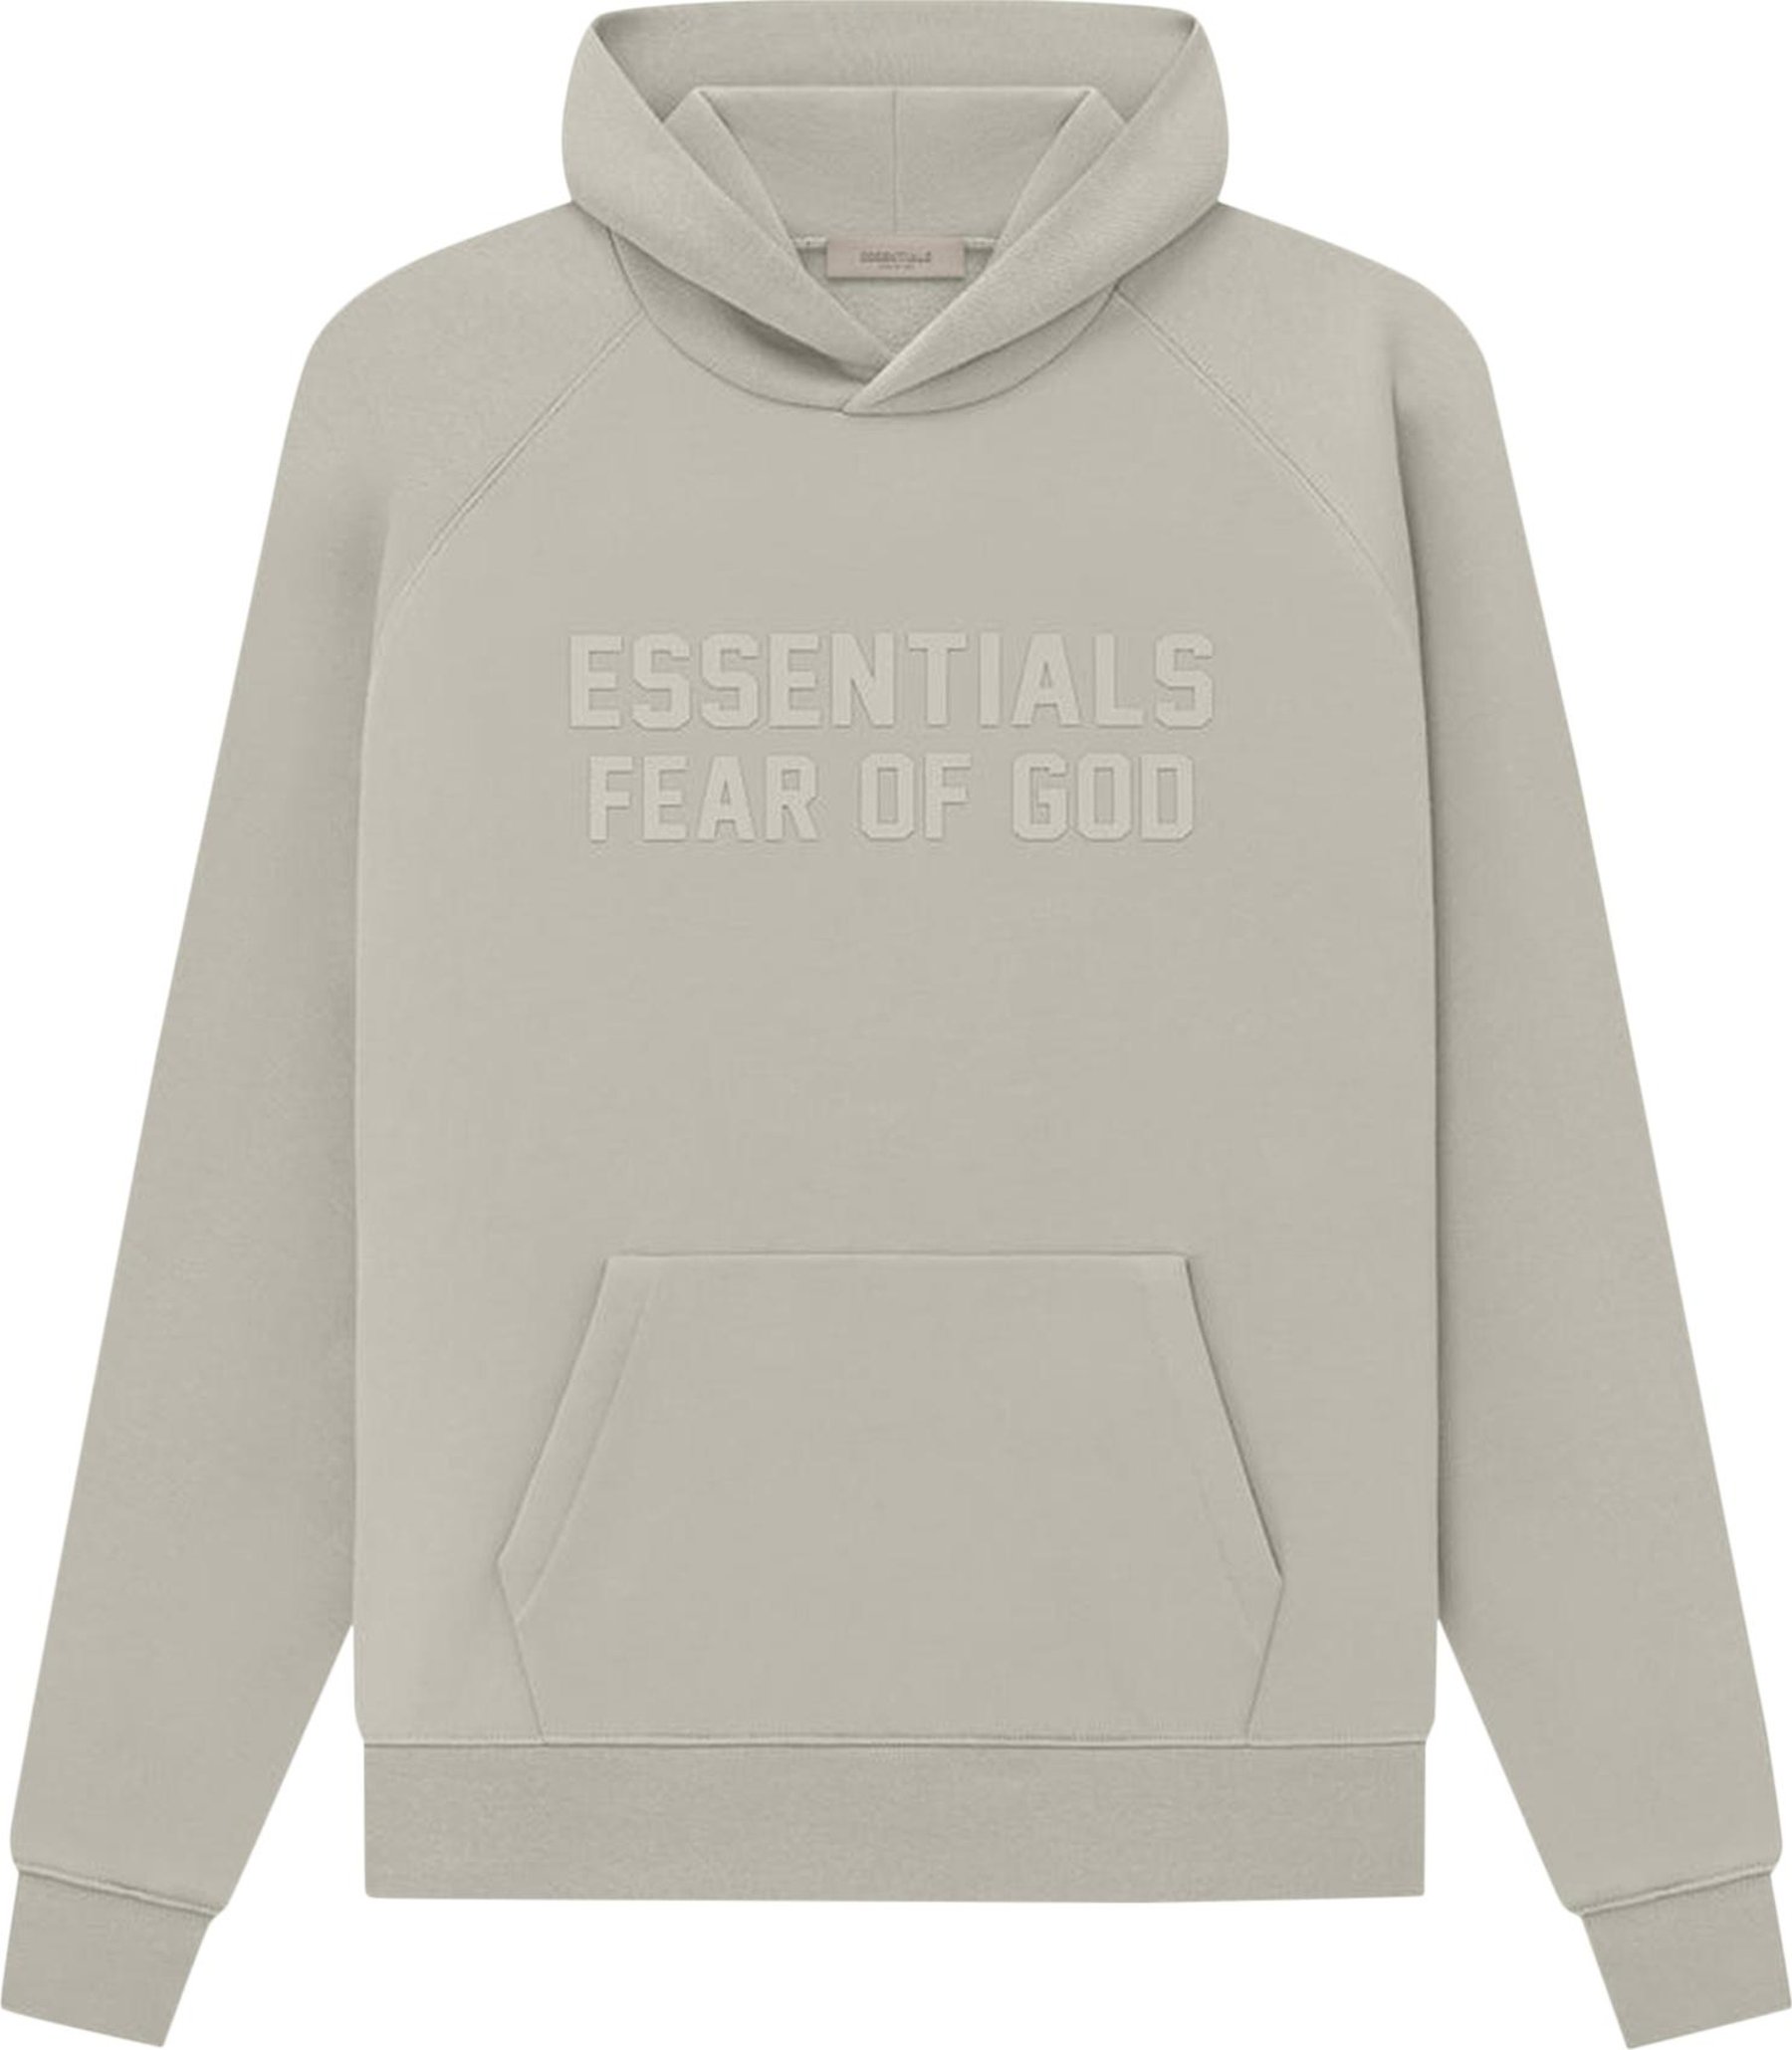 Buy Fear of God Essentials Hoodie 'Seal' - 192BT222053F | GOAT